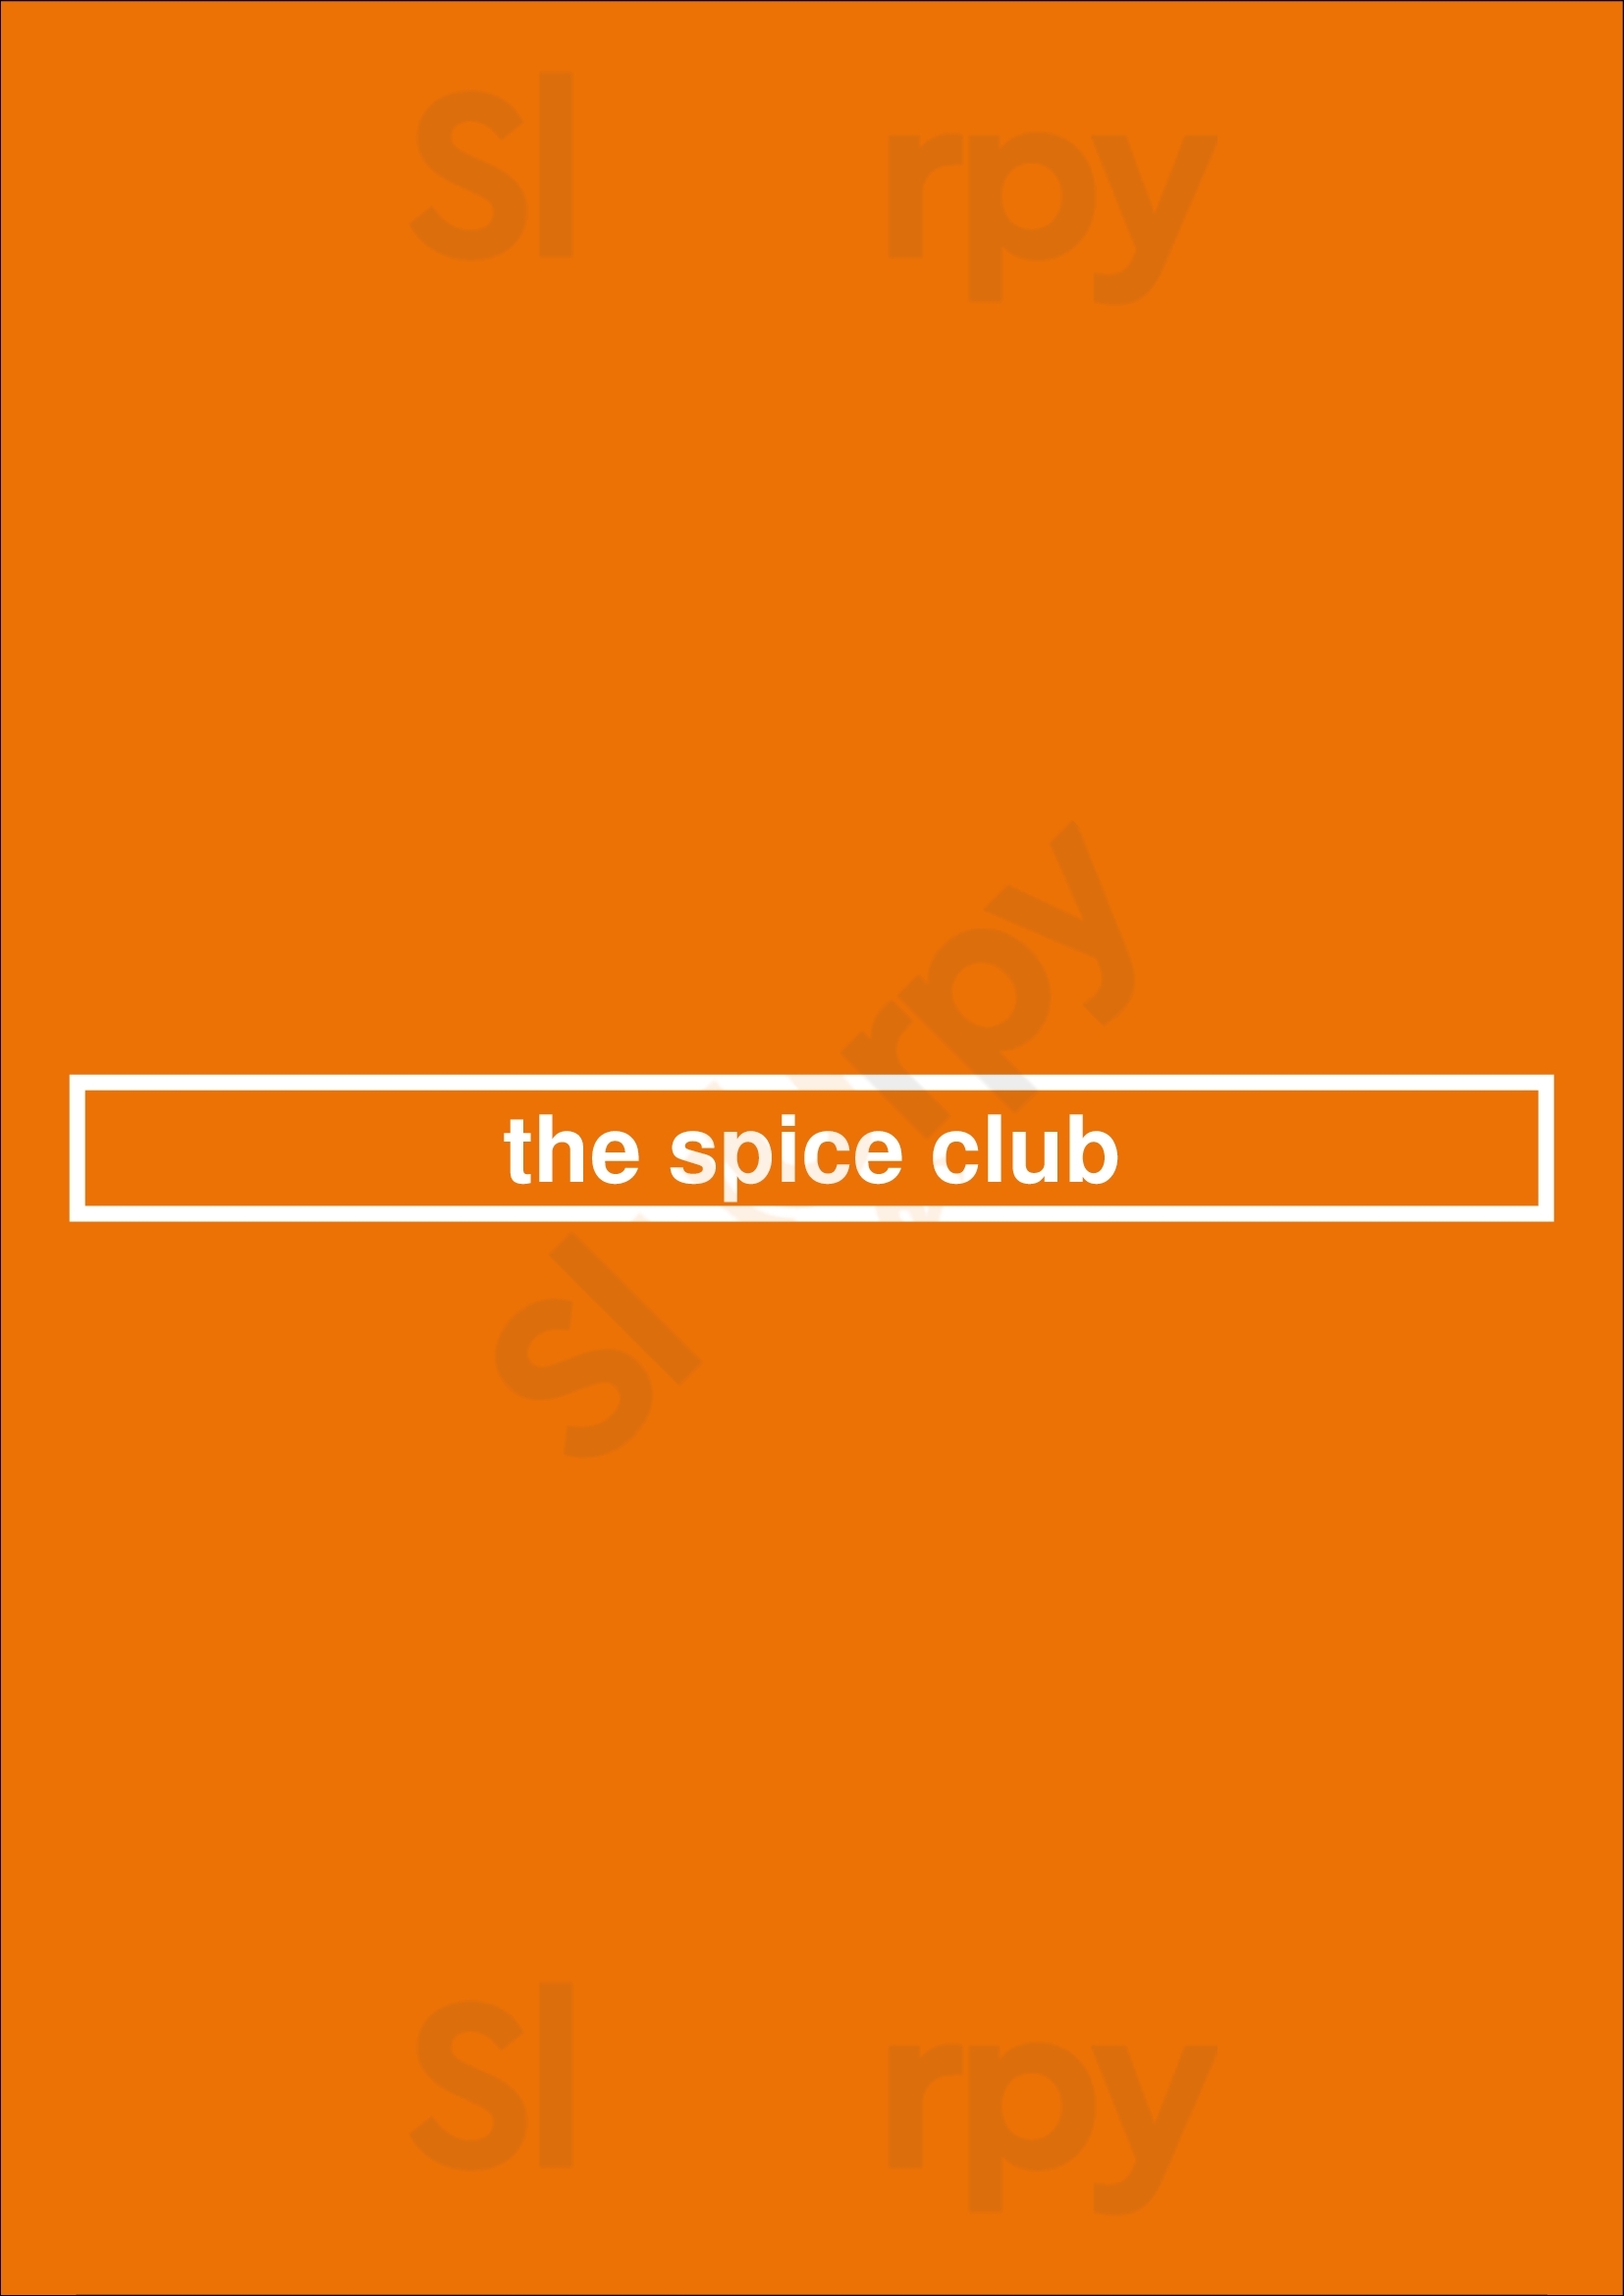 The Spice Club Frankston Menu - 1